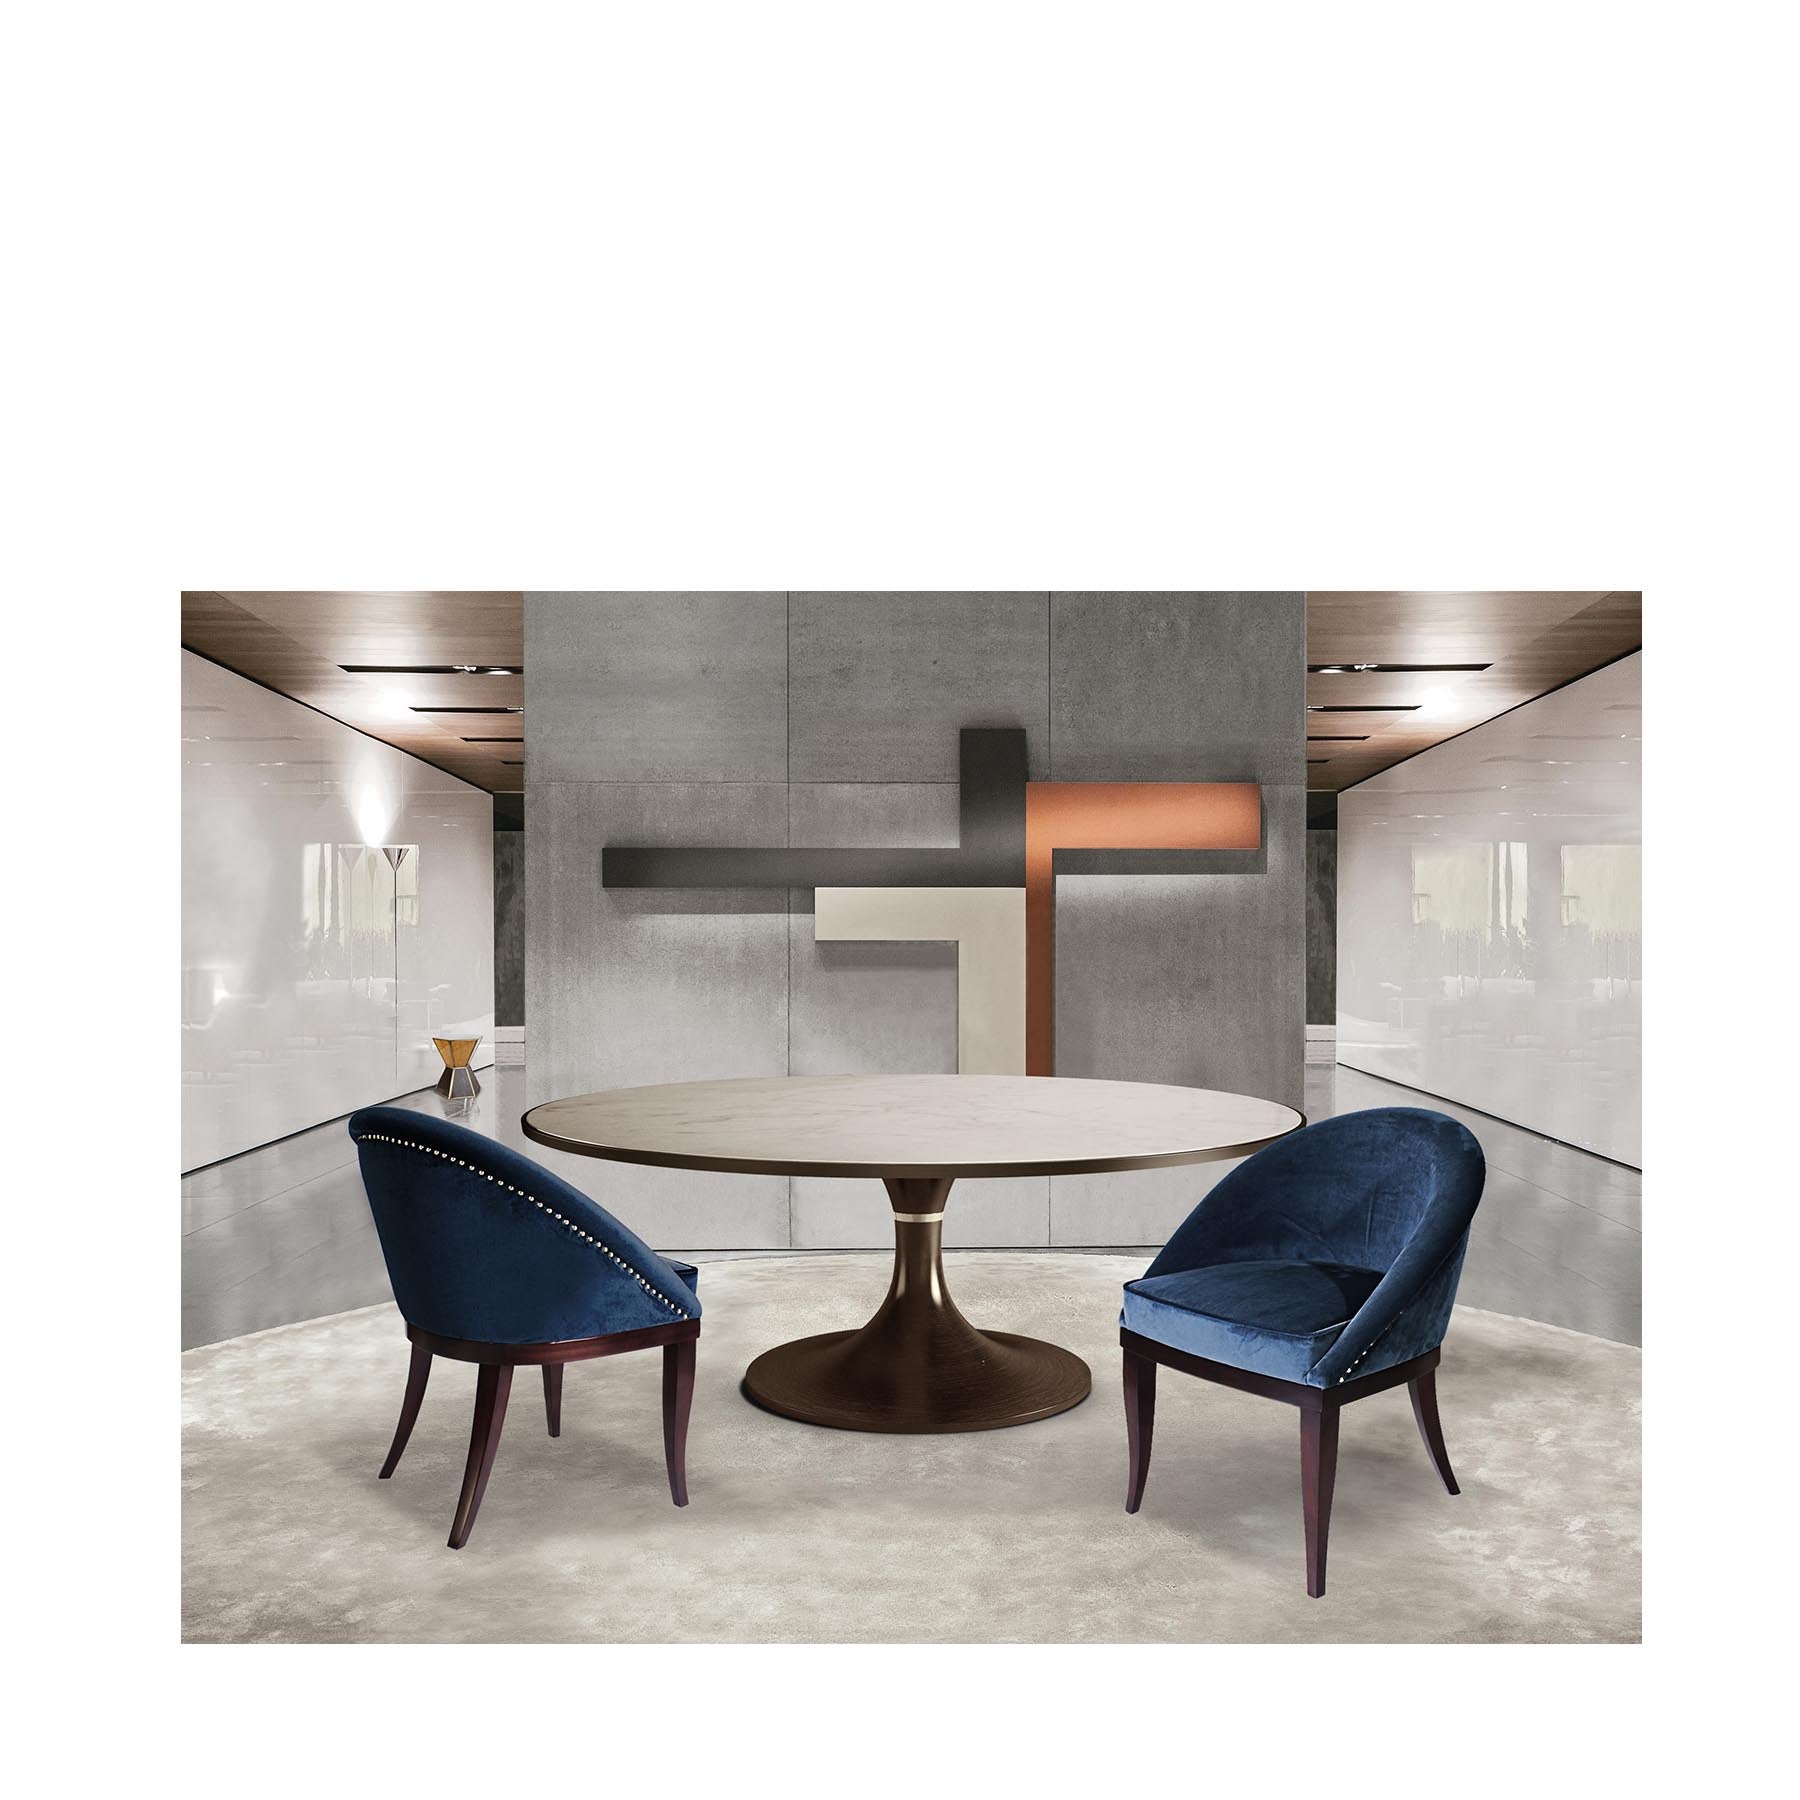 KIM - CHAIR | Modern Furniture + Decor